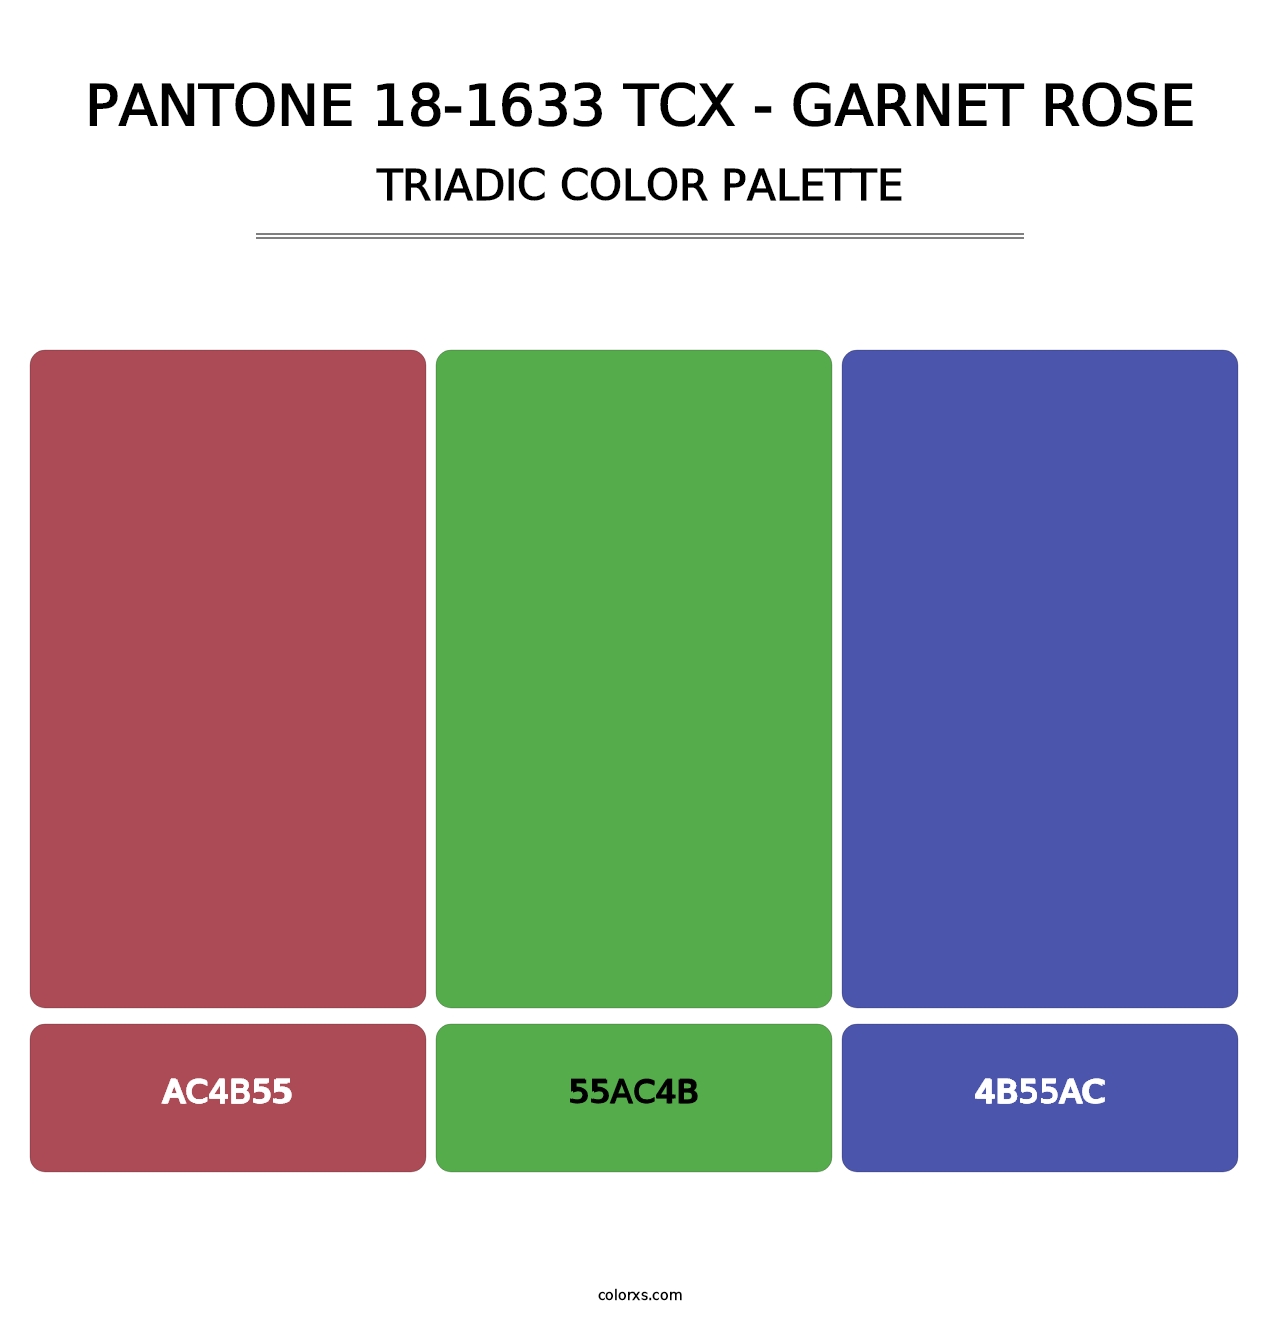 PANTONE 18-1633 TCX - Garnet Rose - Triadic Color Palette